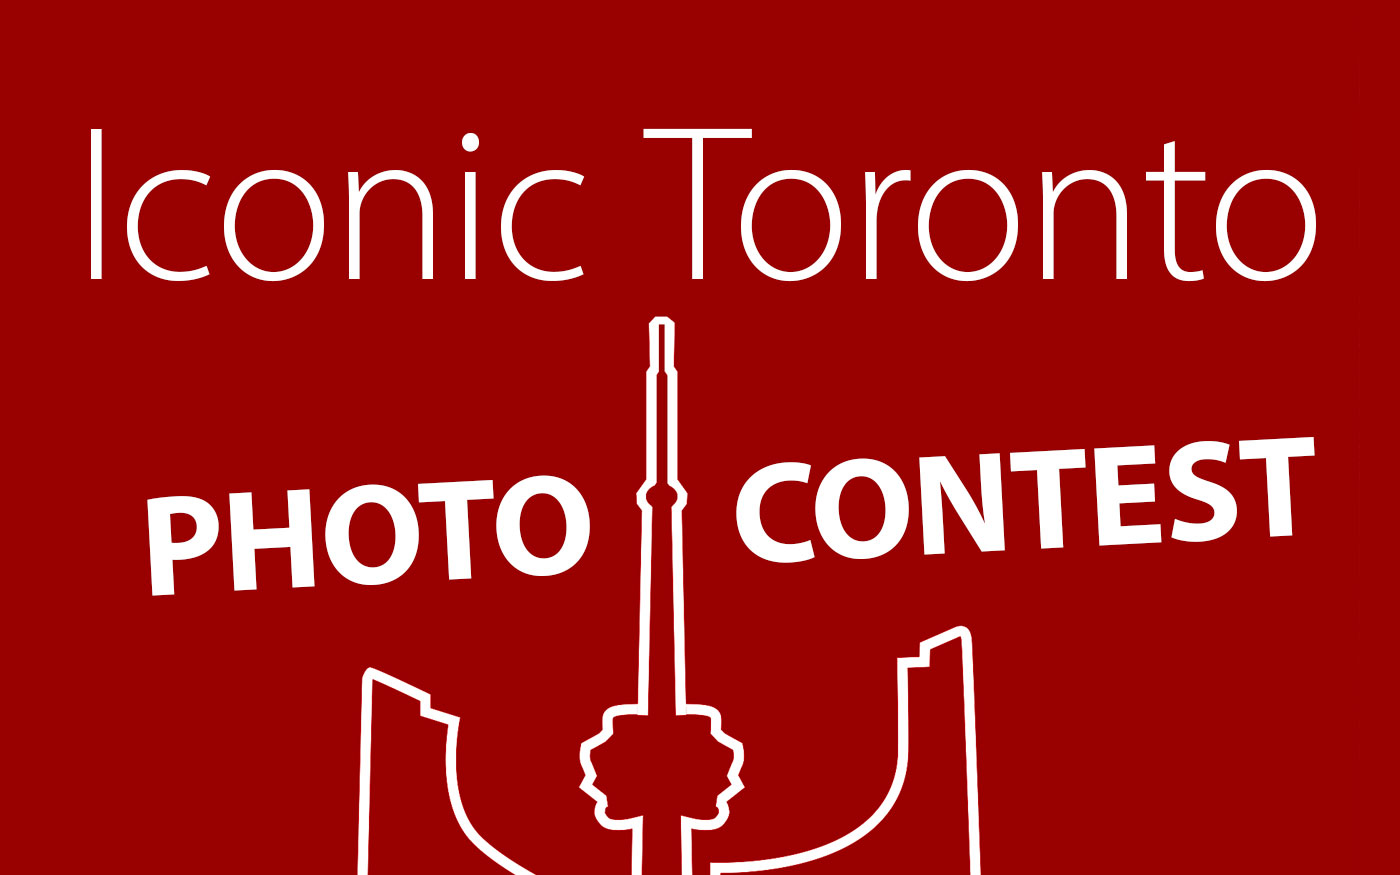 Announcement: Tdot Shots presents the Iconic Toronto Photo Contest 2022